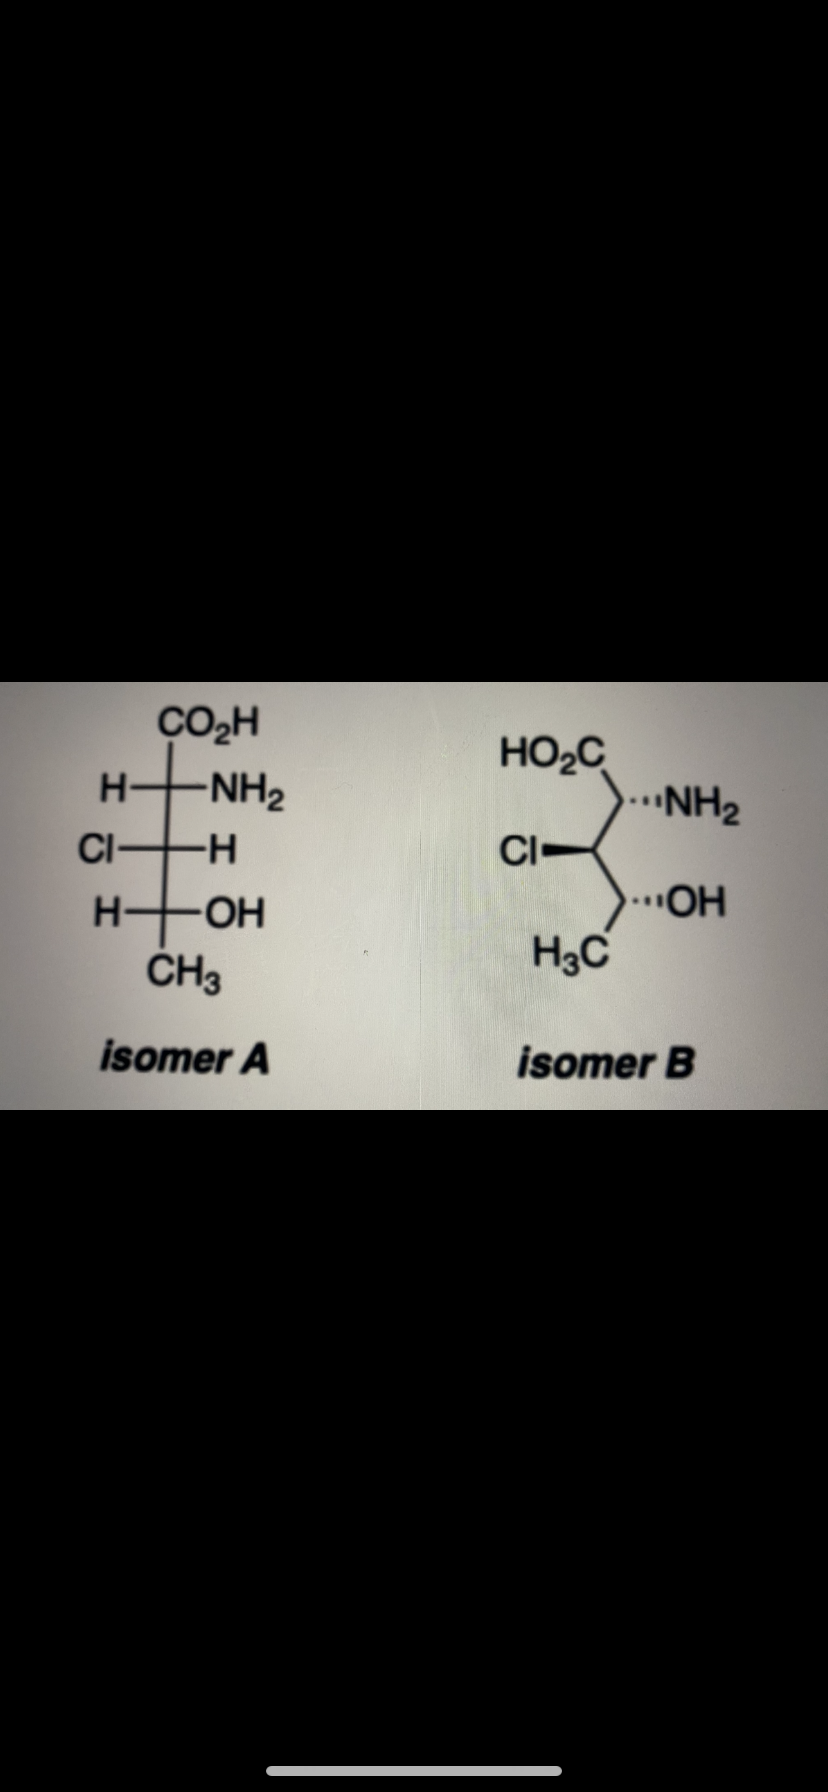 CO₂H
H-NH2
CI-H
H
-он
CH3
isomer A
HO₂C
CI-
H3C
..
NH₂
OH
isomer B